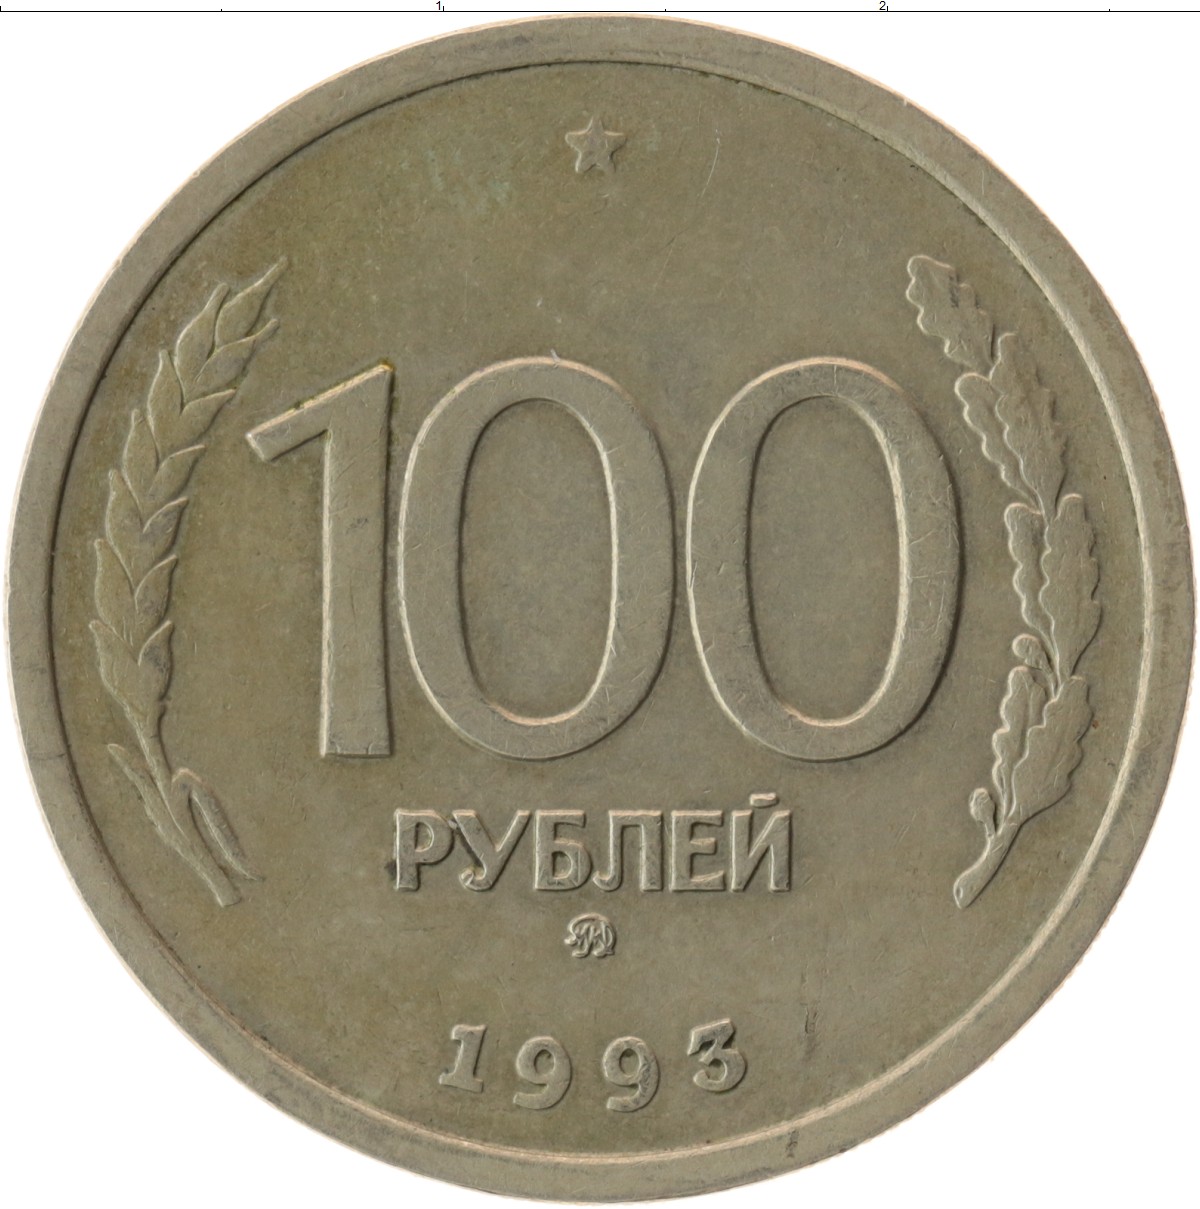 1 тин в рублях. 100 Рублей 1993 года. Монета 100 рублей 1993 ЛМД. 100 Рублей 1993 Аверс-Аверс. Монета номиналом 100 рублей 1993 года Московский монетный двор.